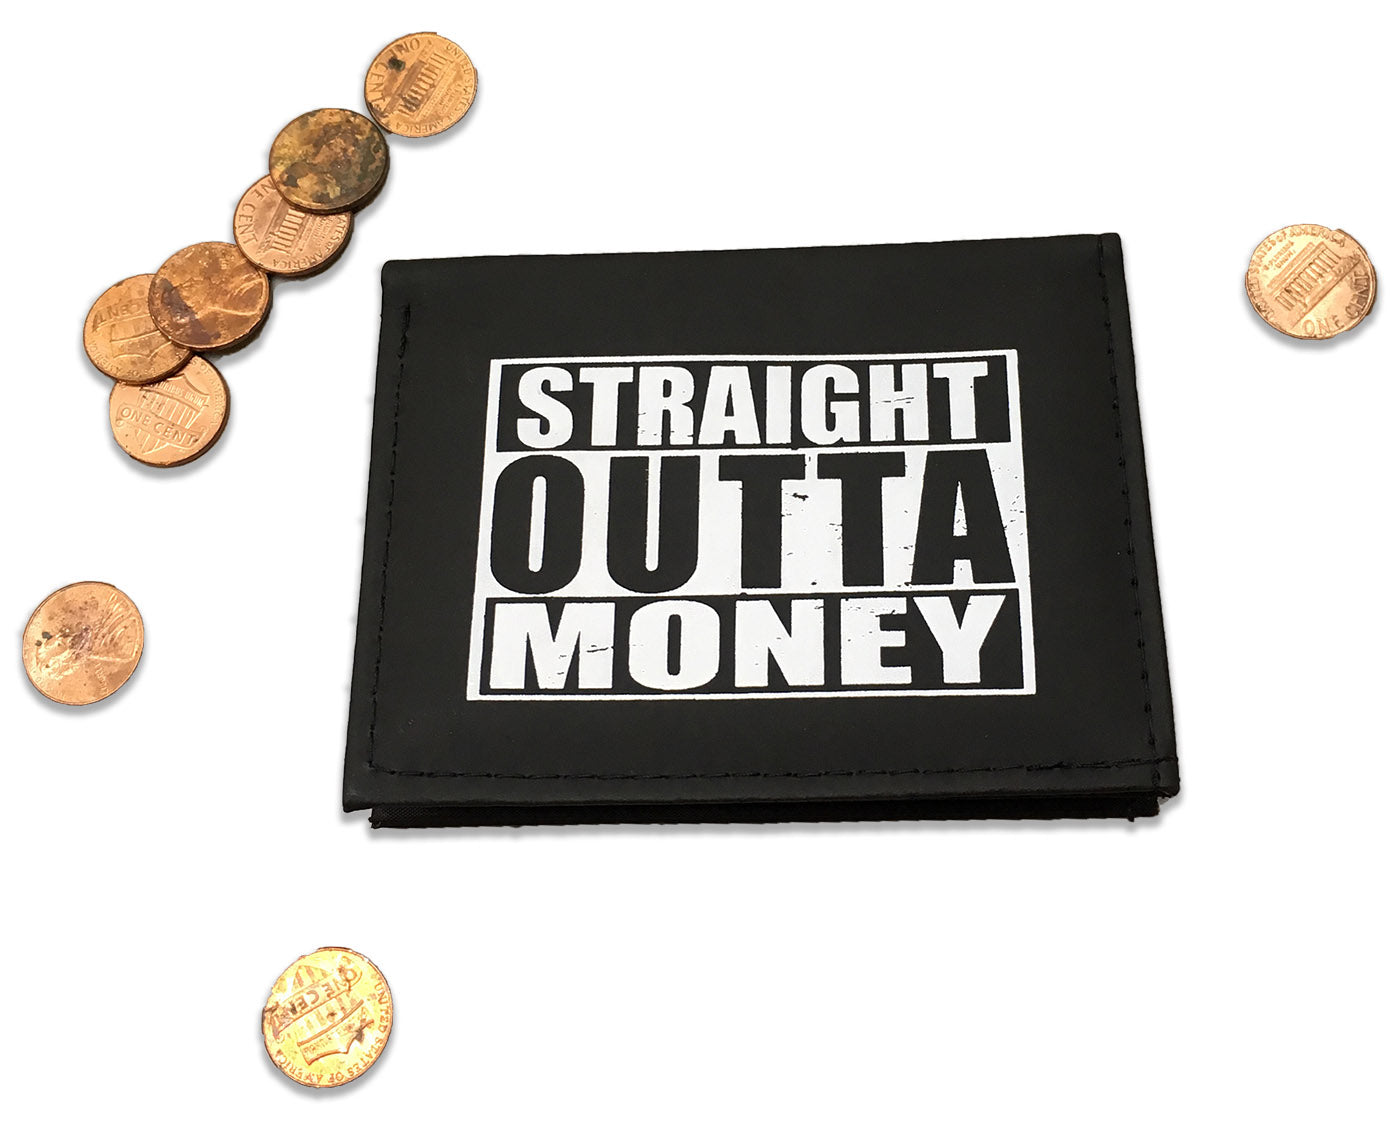 Straight Outta Money Wallet